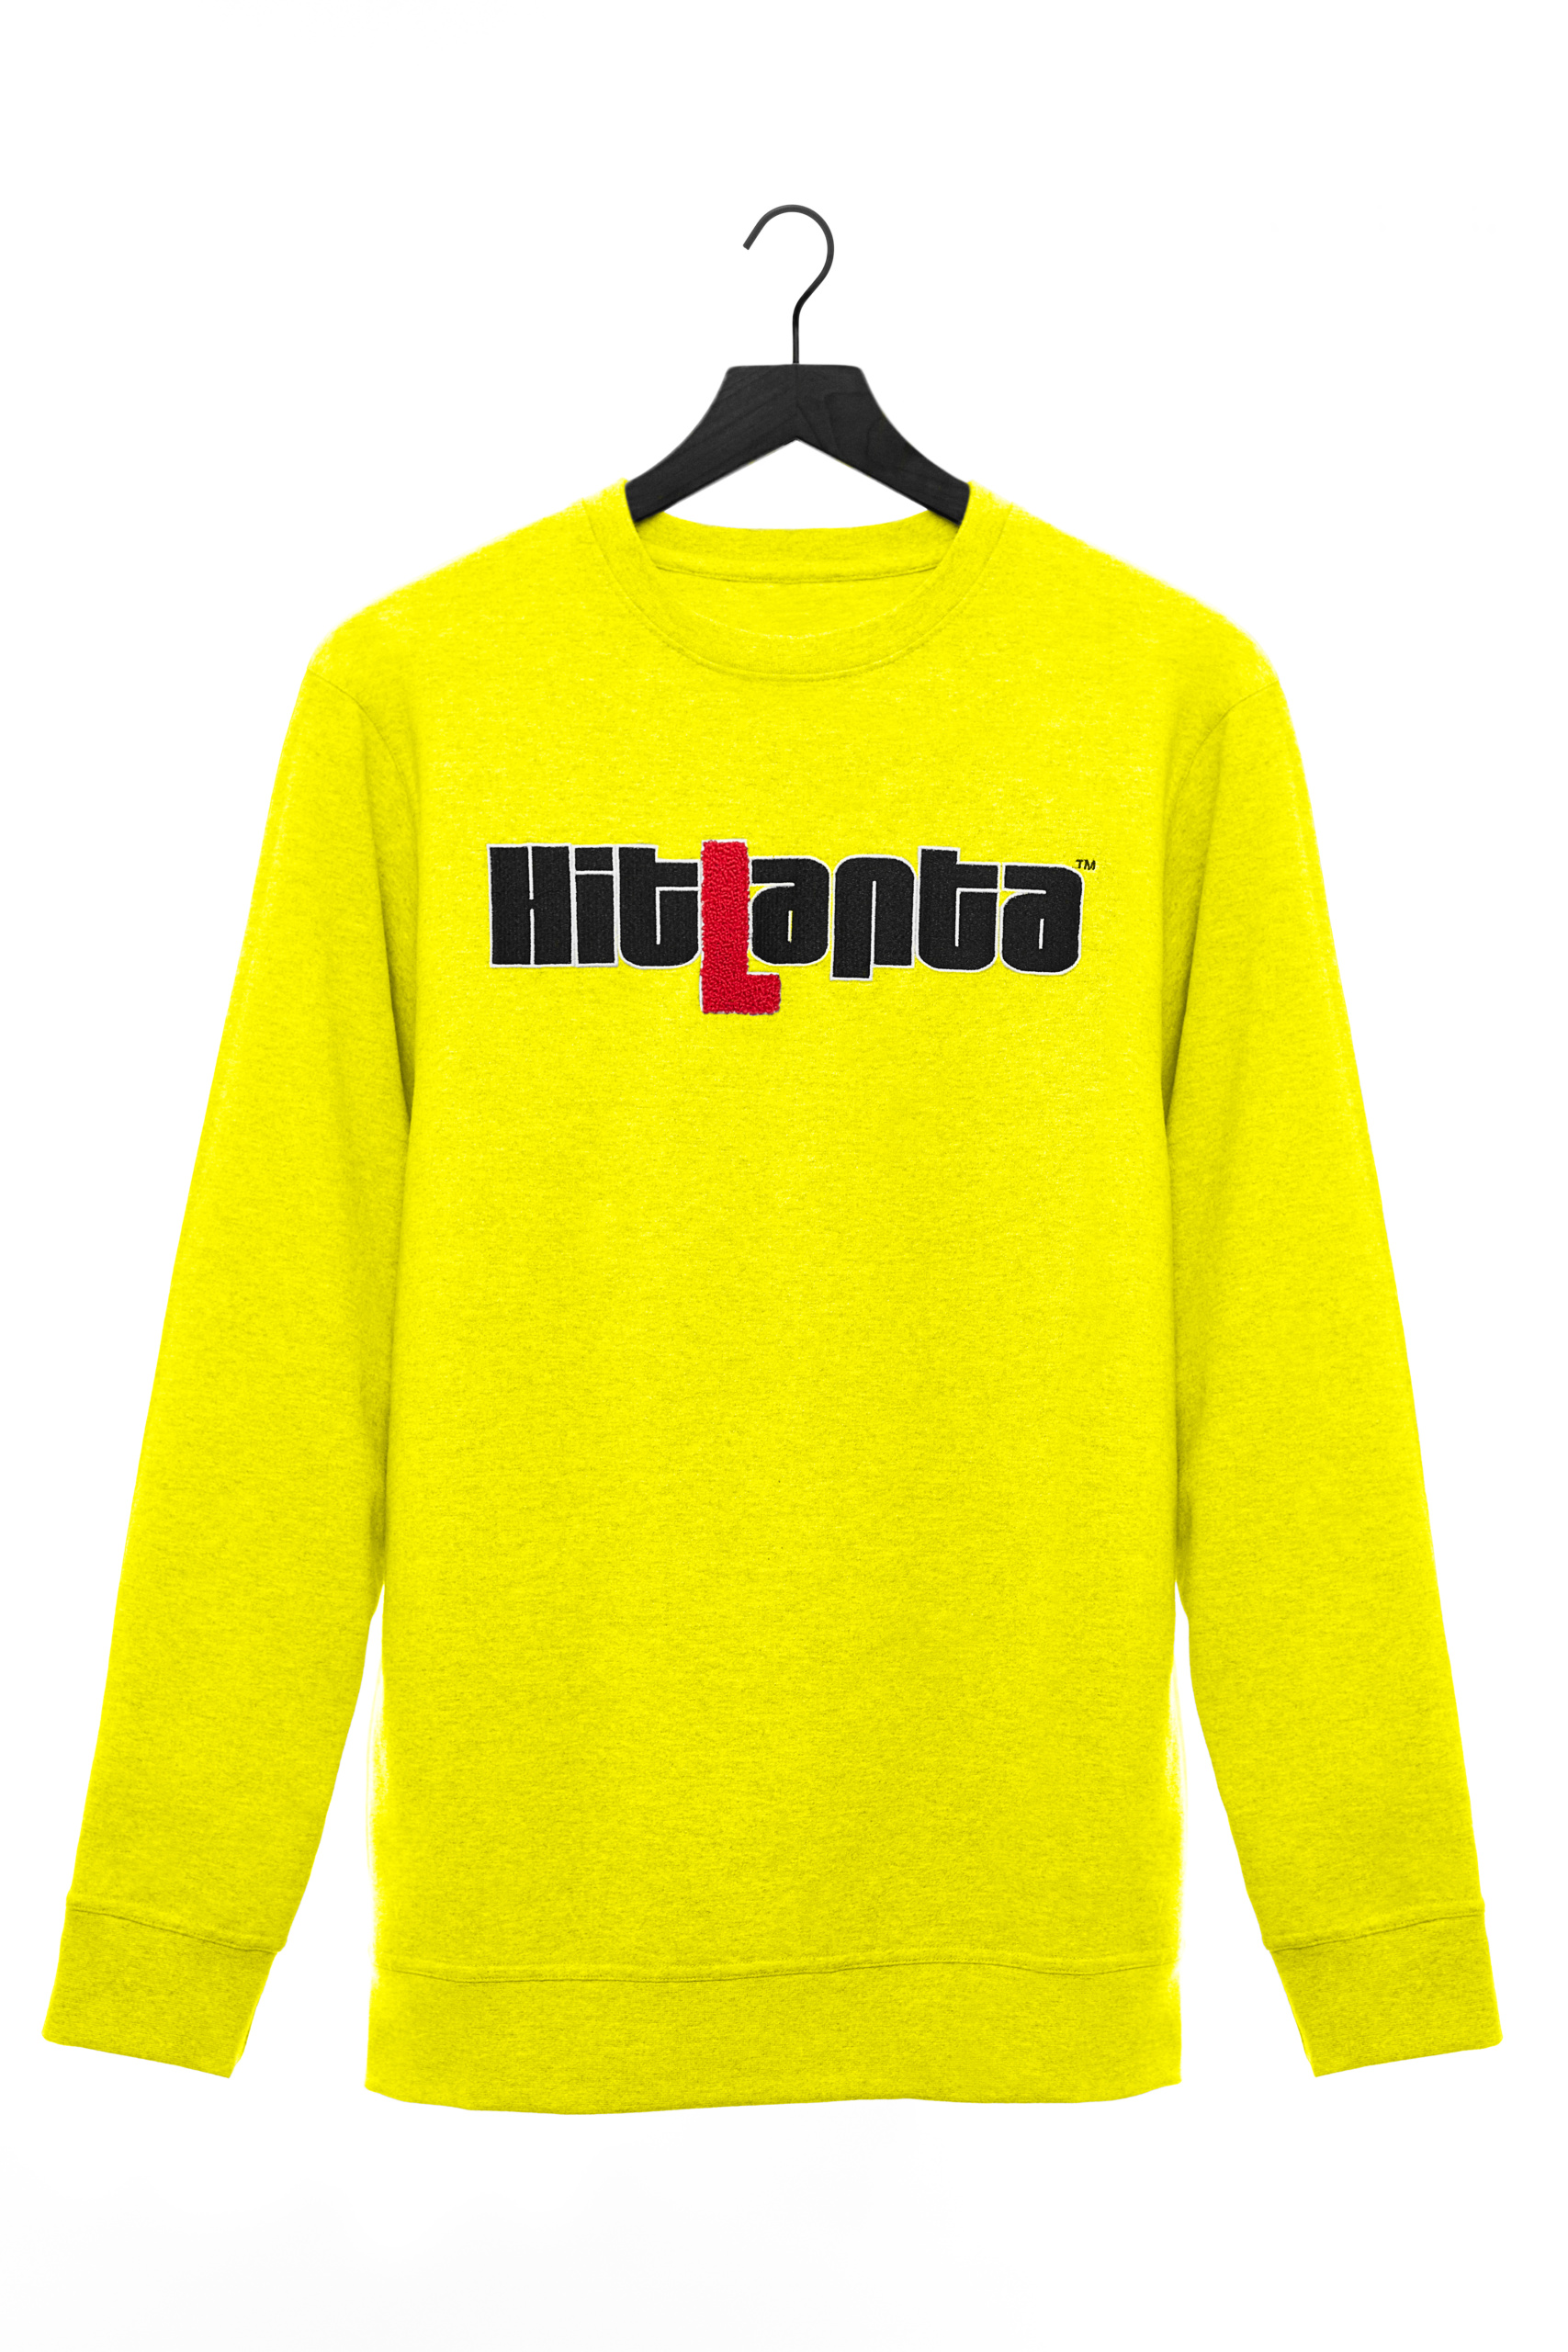 HitLanta-Yellow-HighRes-Sweatshirt